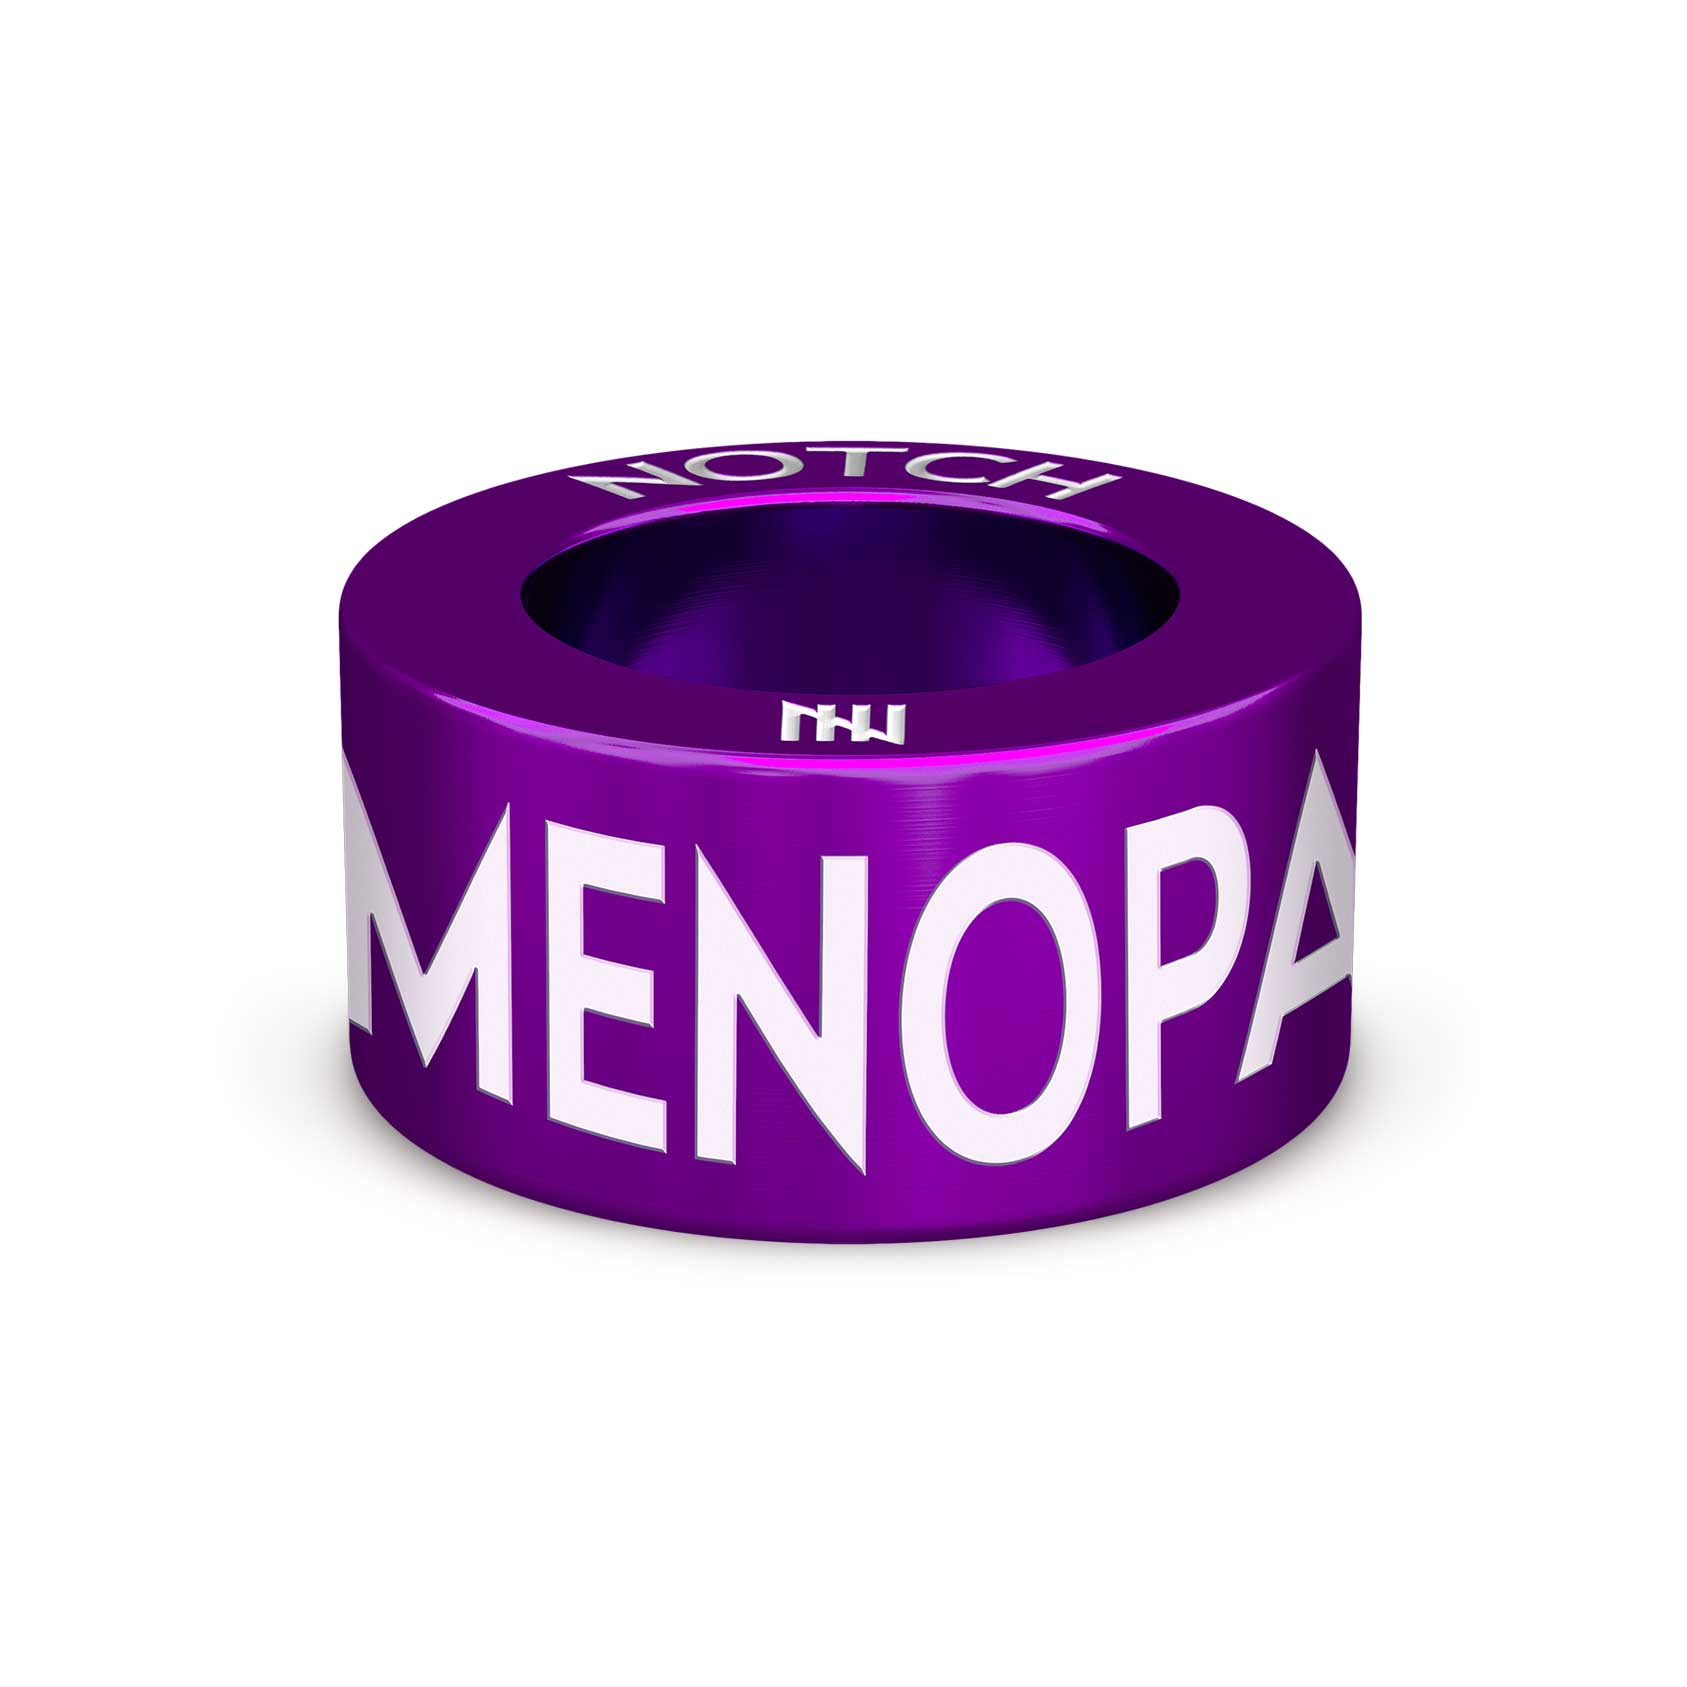 Menopause NOTCH Charm (Full List)